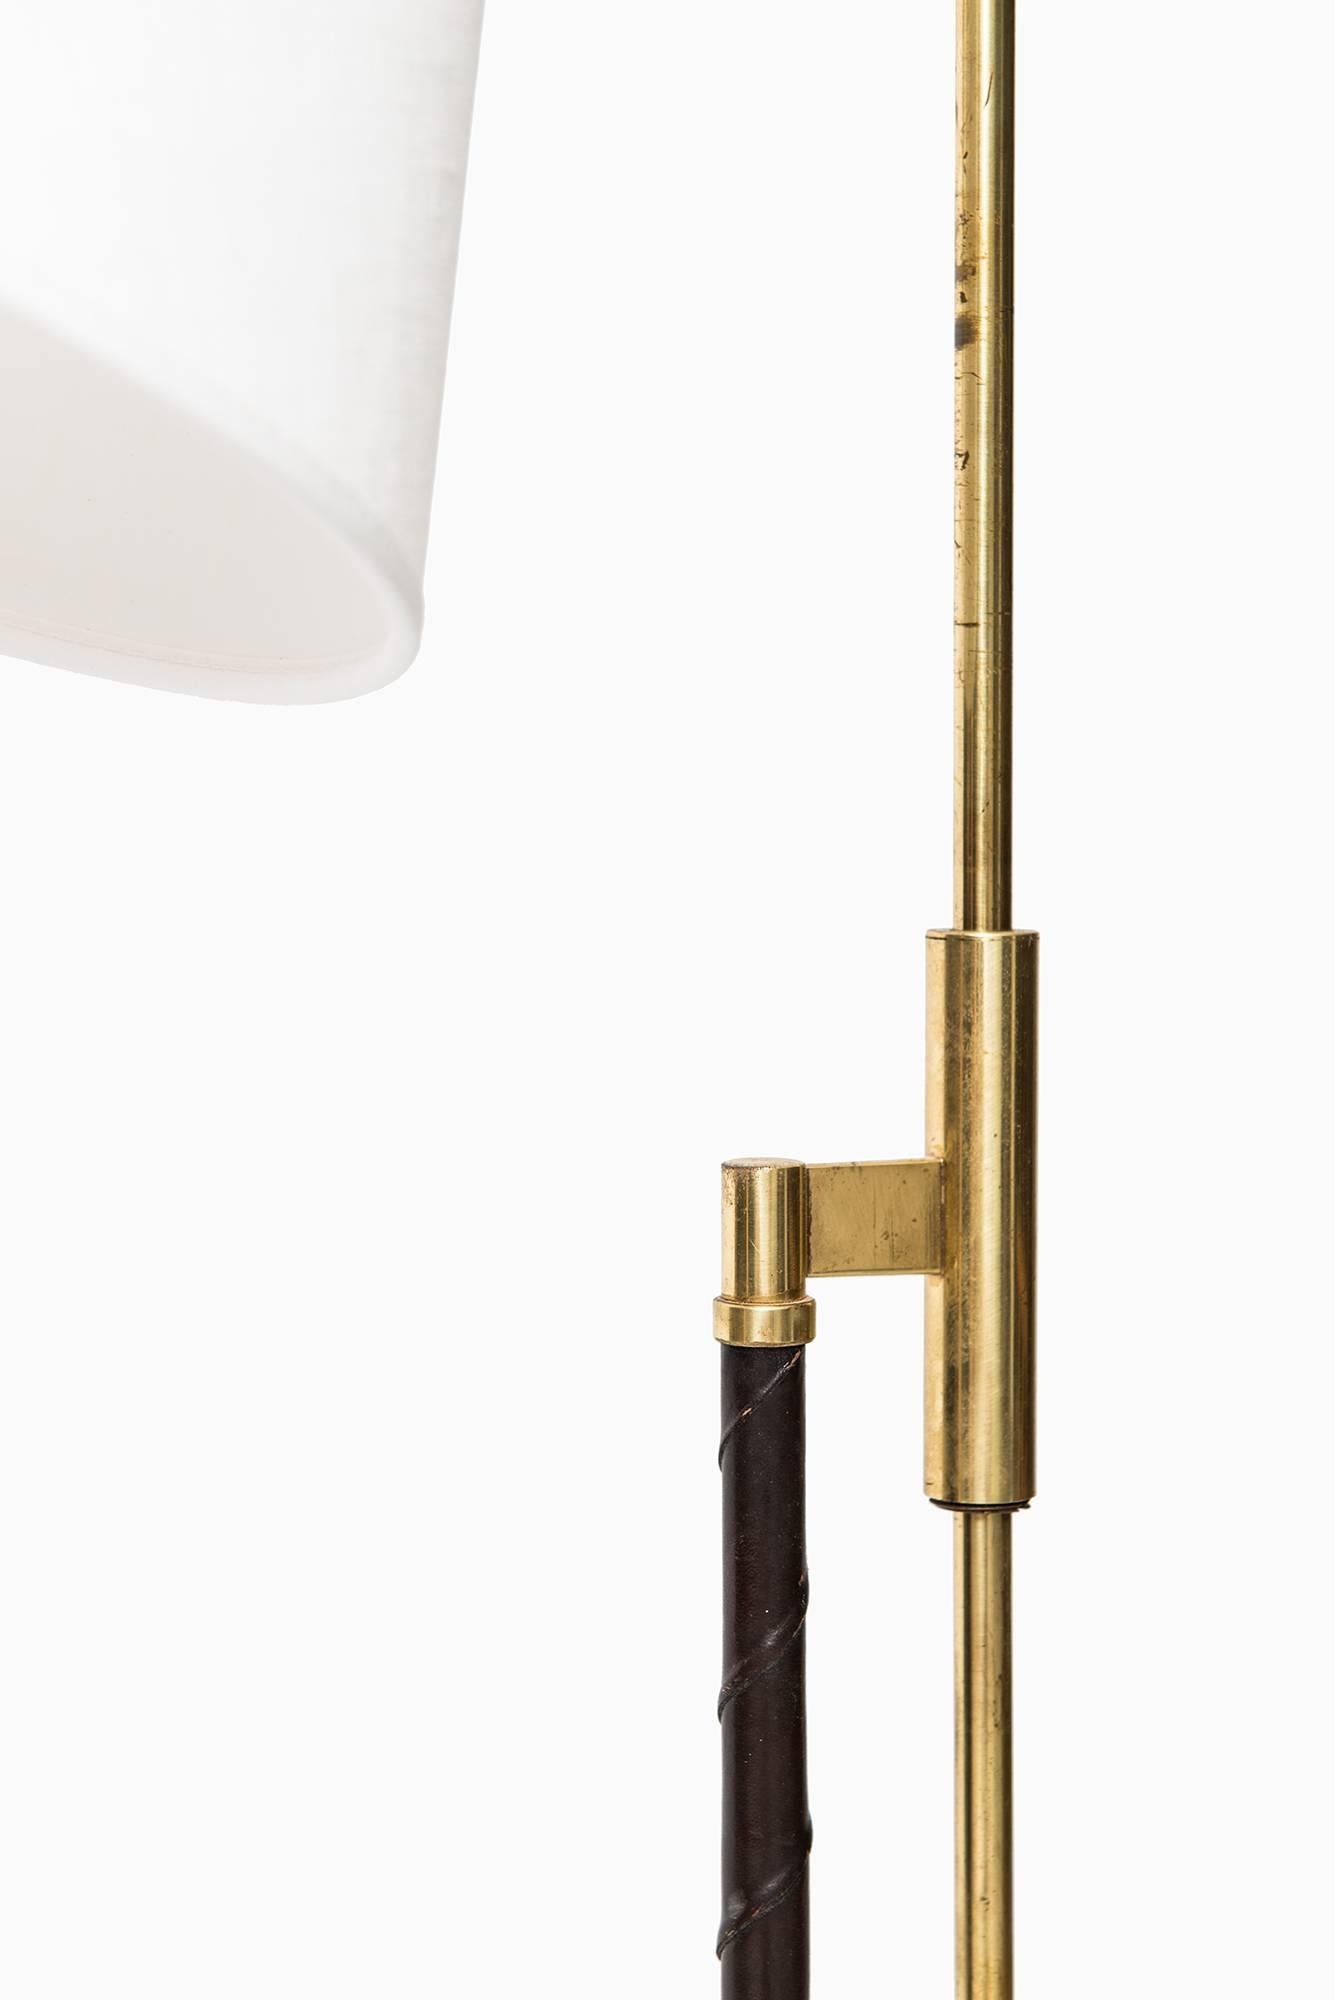 Scandinavian Modern Height Adjustable Floor Lamp Produced by Falkenbergs Belysnings in Sweden